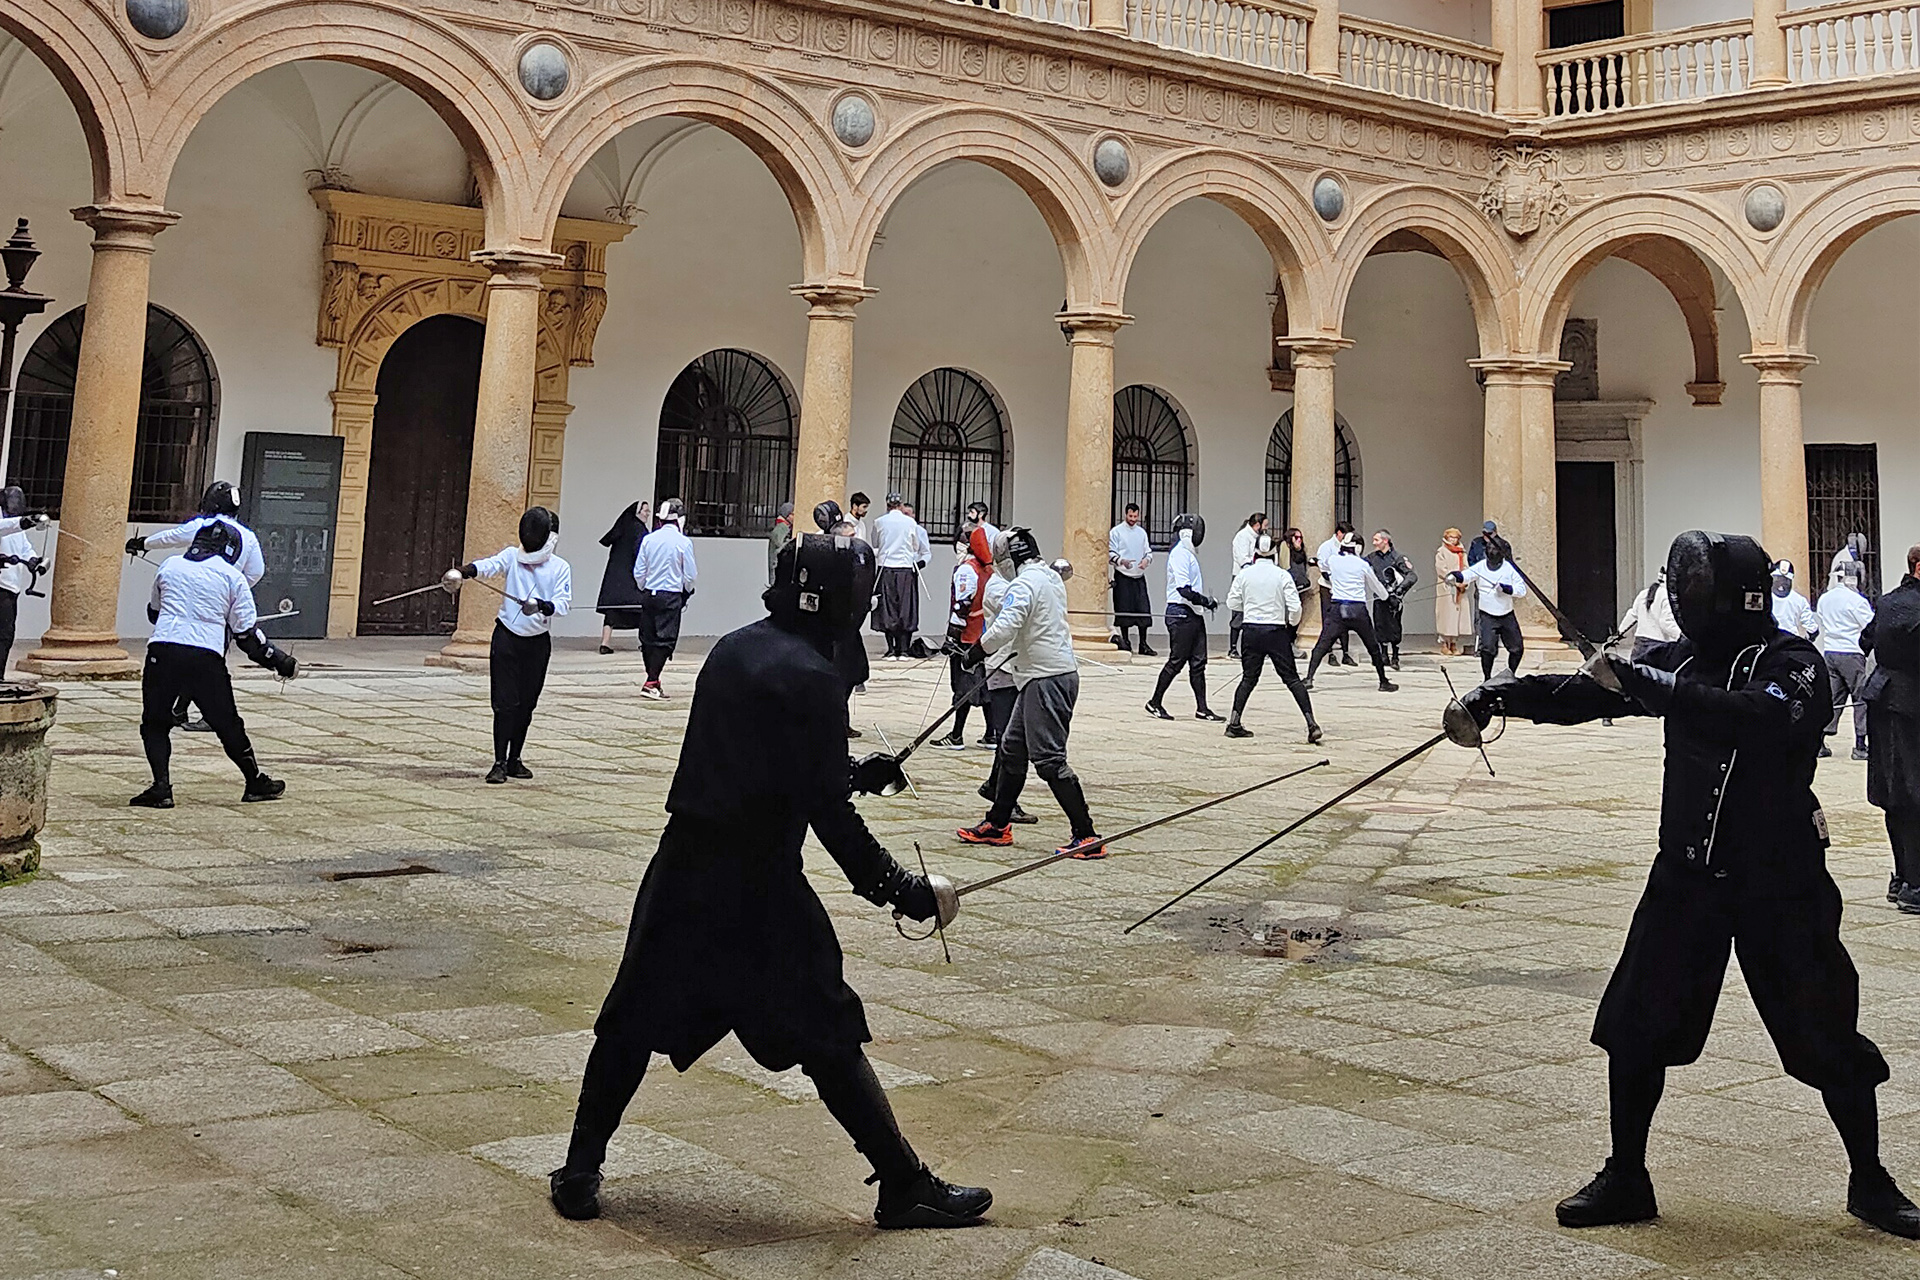 Fencing days in the Hospital de Tavera